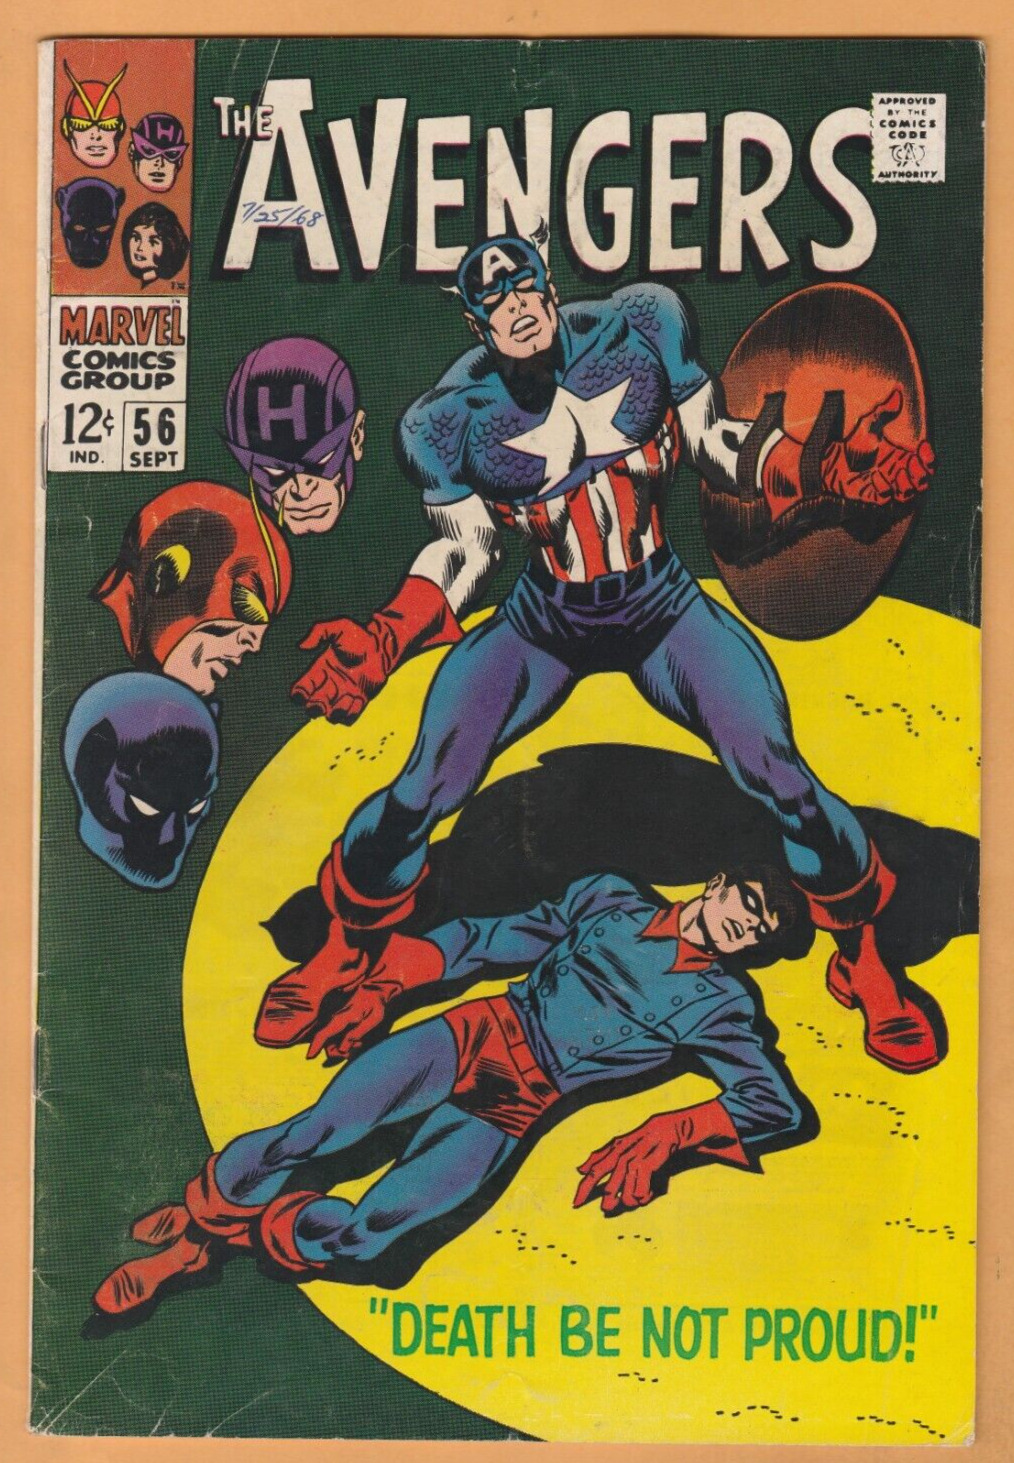 Avengers #56 - Origin of Captain America - Death of Bucky - VG (4.0)